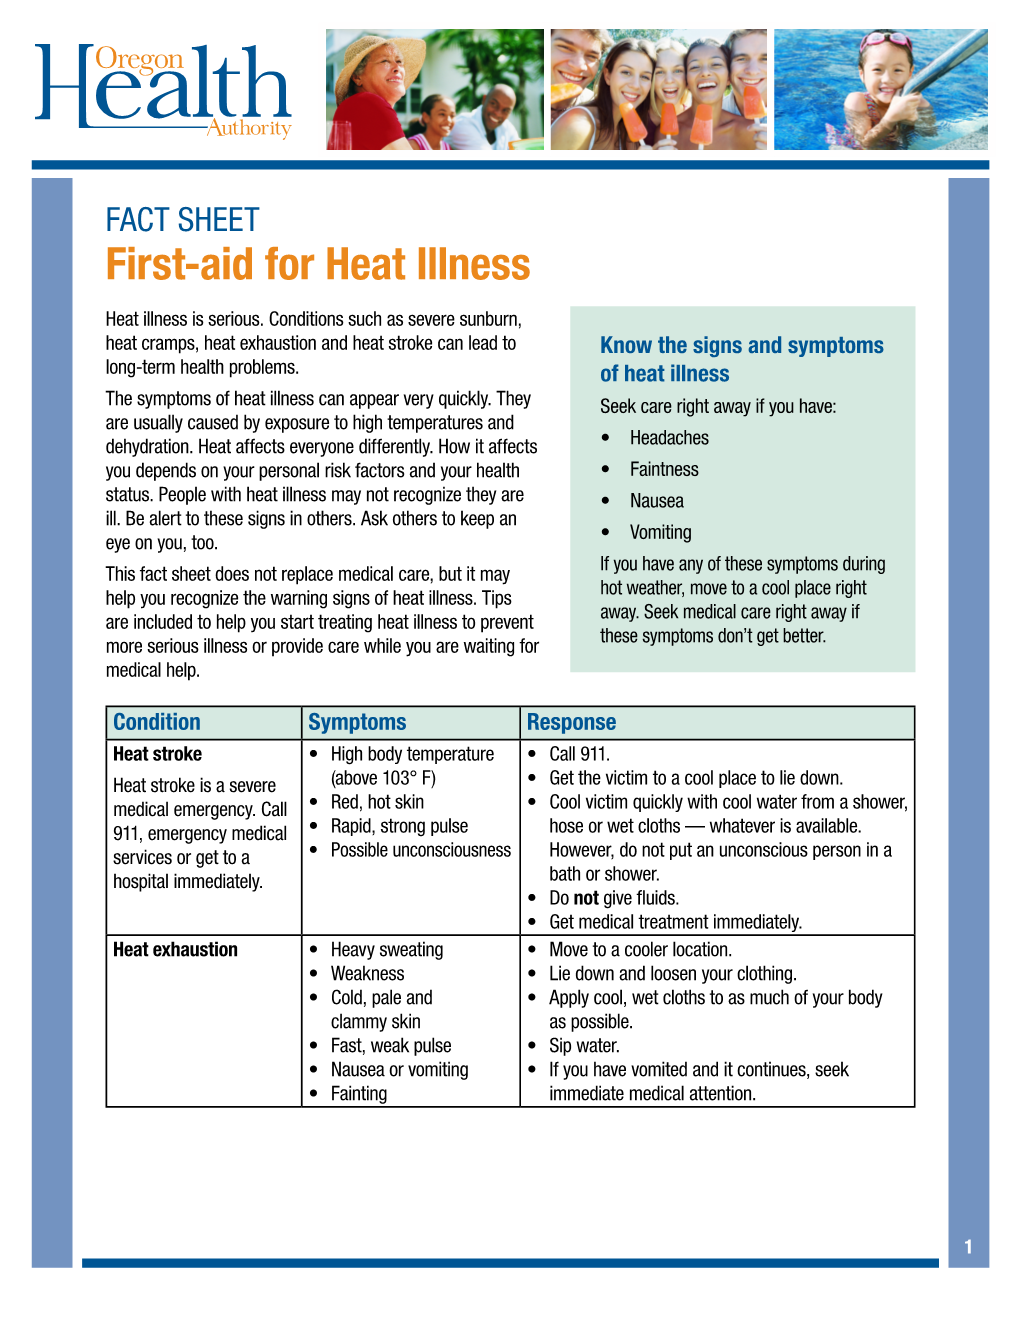 FACT SHEET First-Aid for Heat Illness